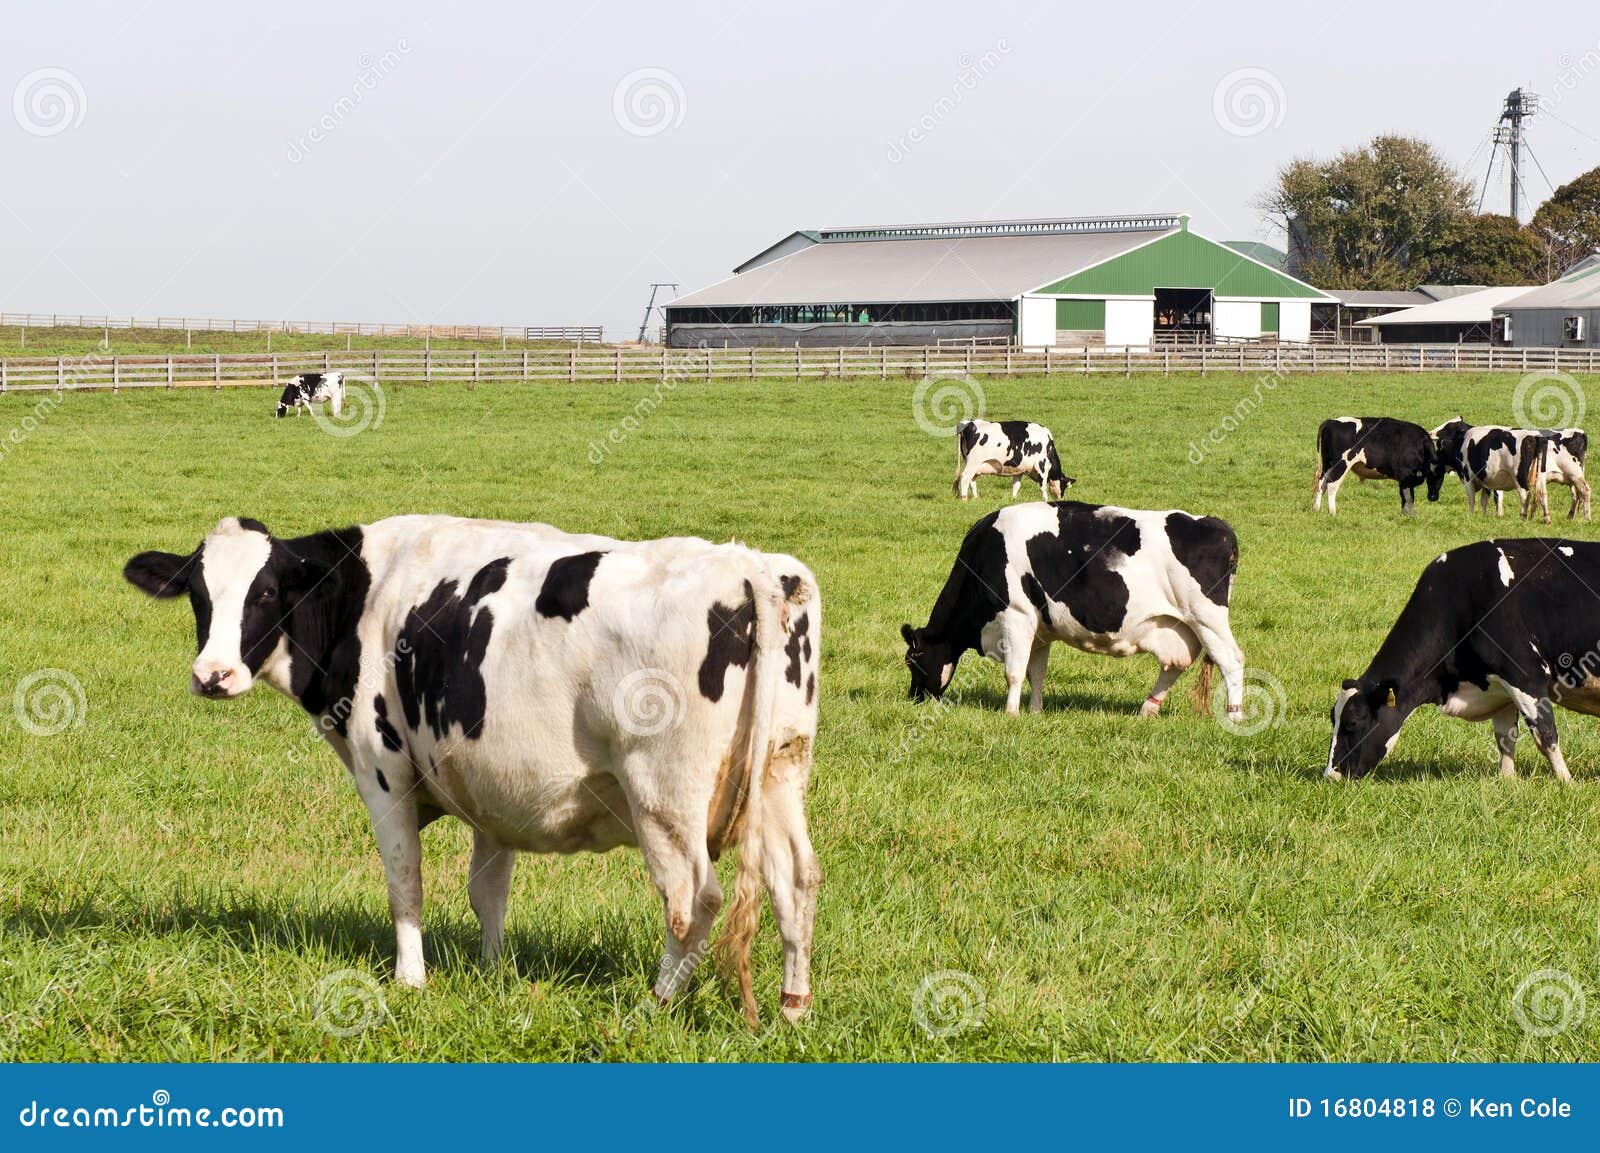 cow herd in farm pasture